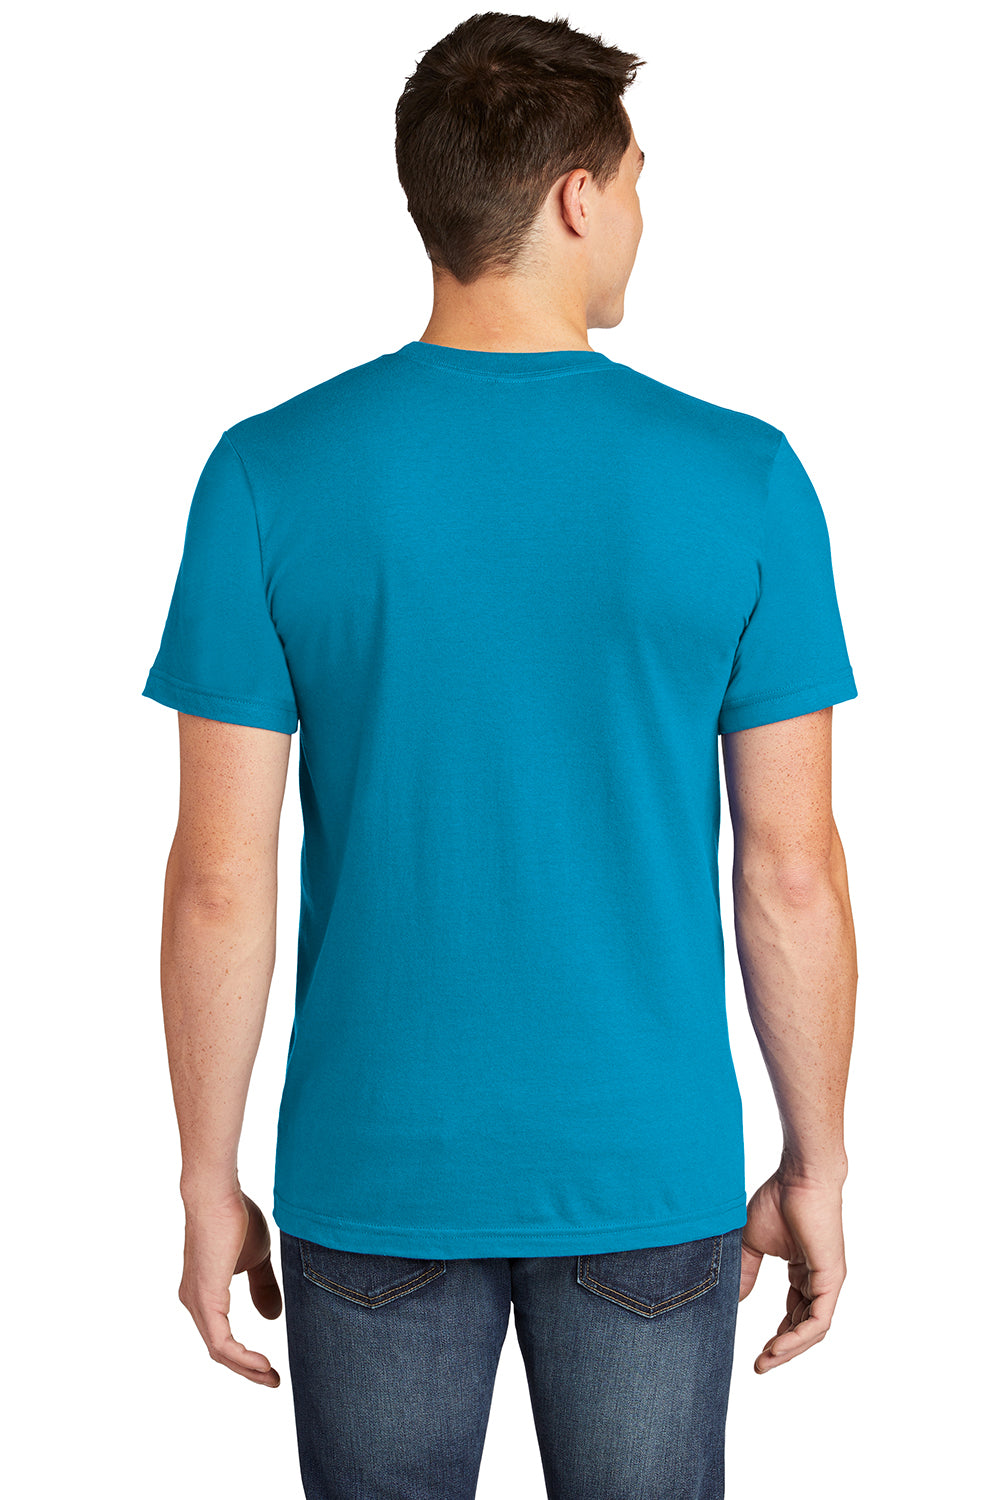 American Apparel 2001 Mens Fine Jersey Short Sleeve Crewneck T-Shirt Teal Blue Model Back